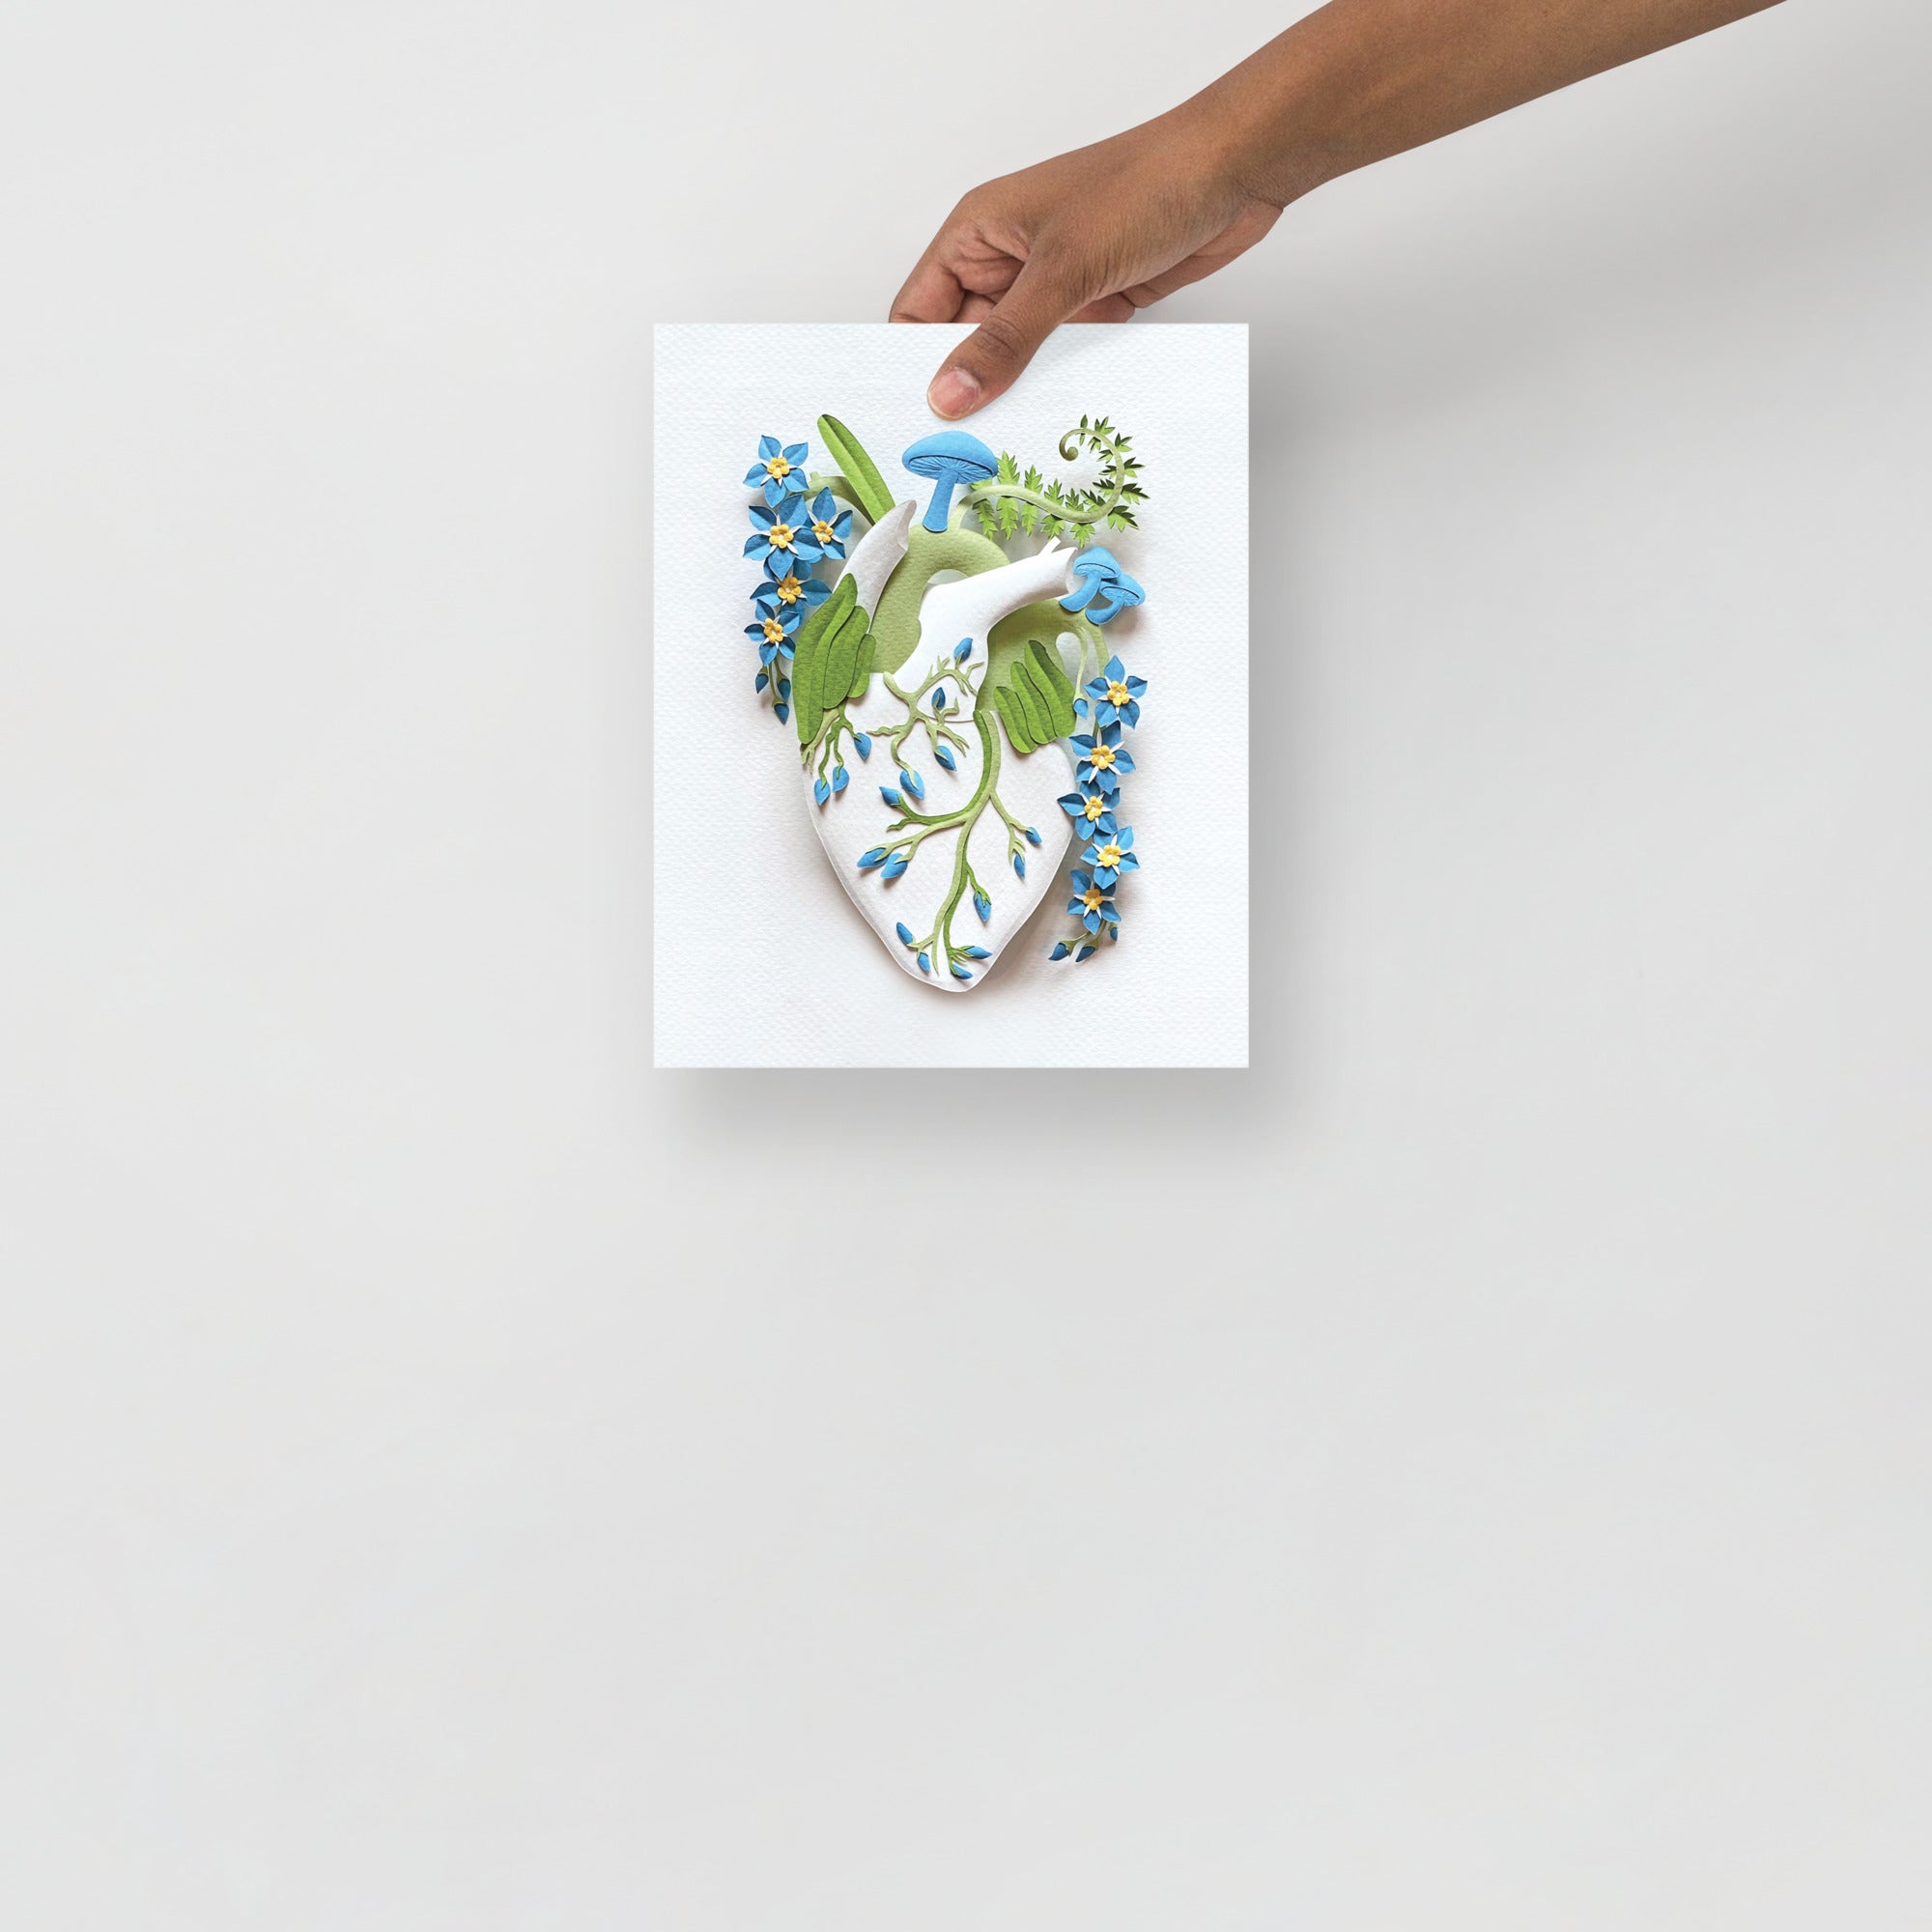 Healing Heart: Forget-me-not 8" x 10" print